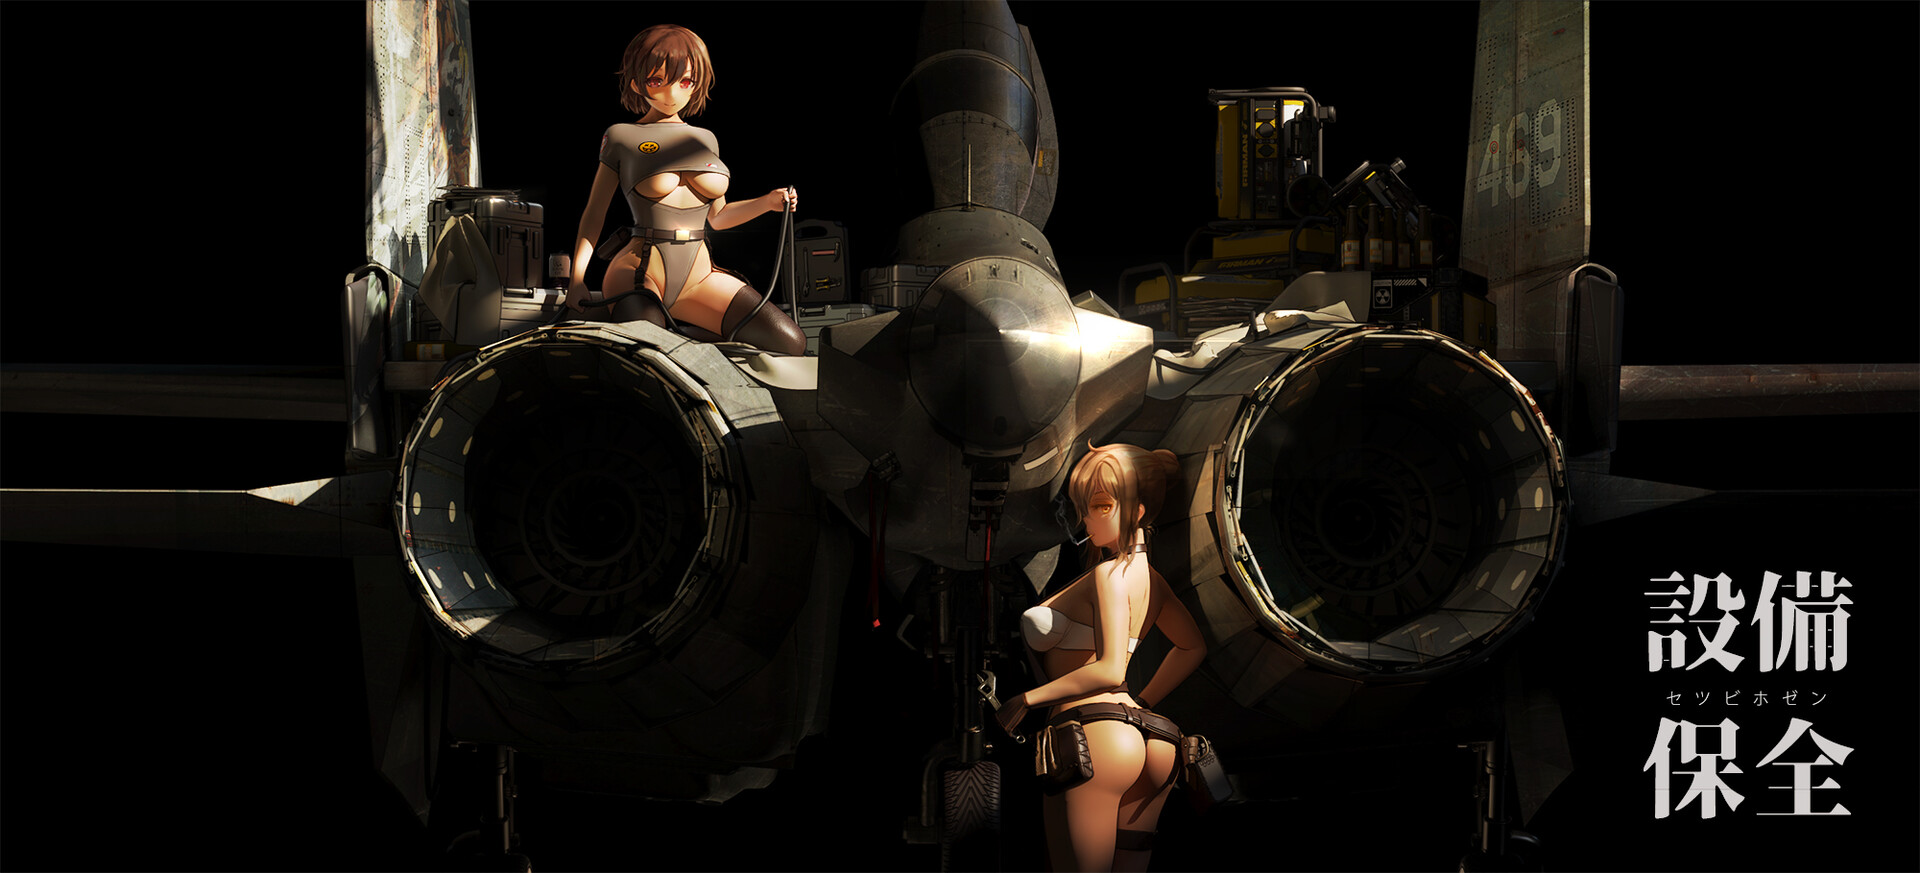 Anime 1920x873 Nekocha anime anime girls two women aircraft military aircraft vehicle boobs ass standing kneeling artwork